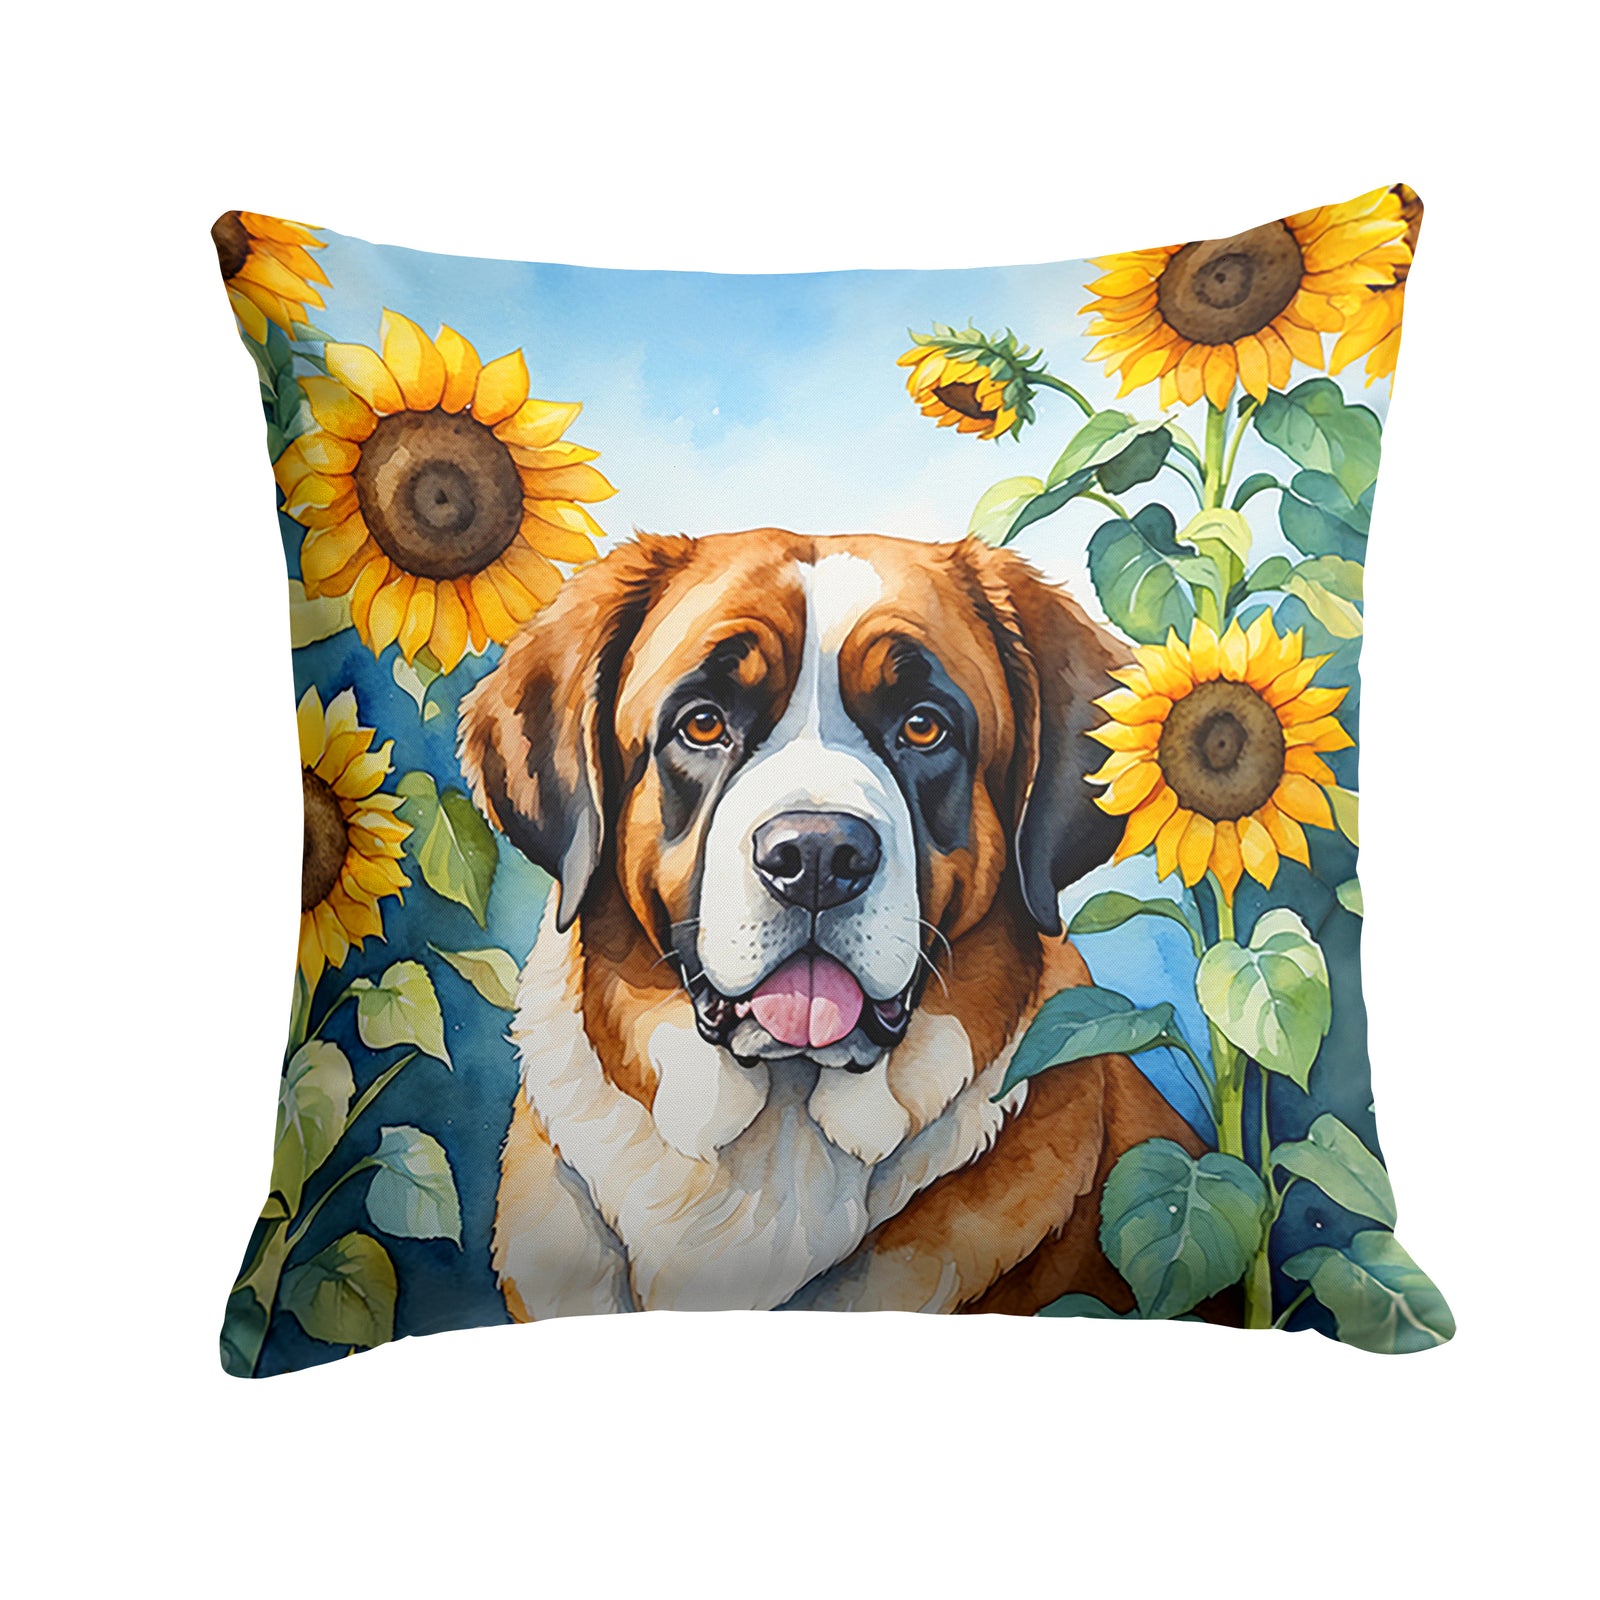 Buy this Saint Bernard in Sunflowers Throw Pillow